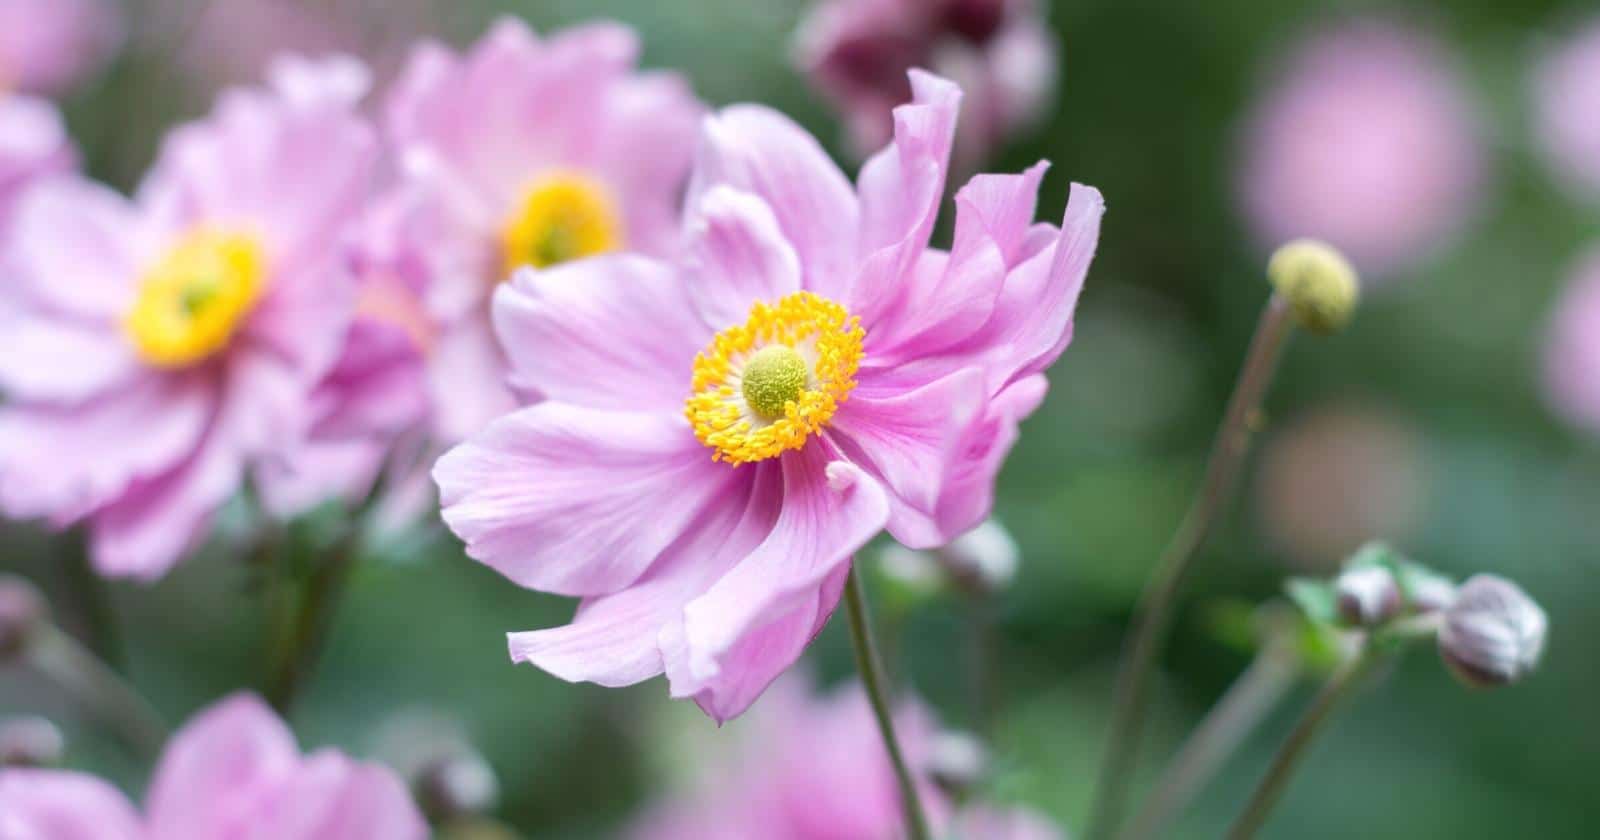 Full Sun Exposure Dark Pink Chrysanthemum Flower Pant, For Garden, Autumn  at Rs 1/piece in Haldia